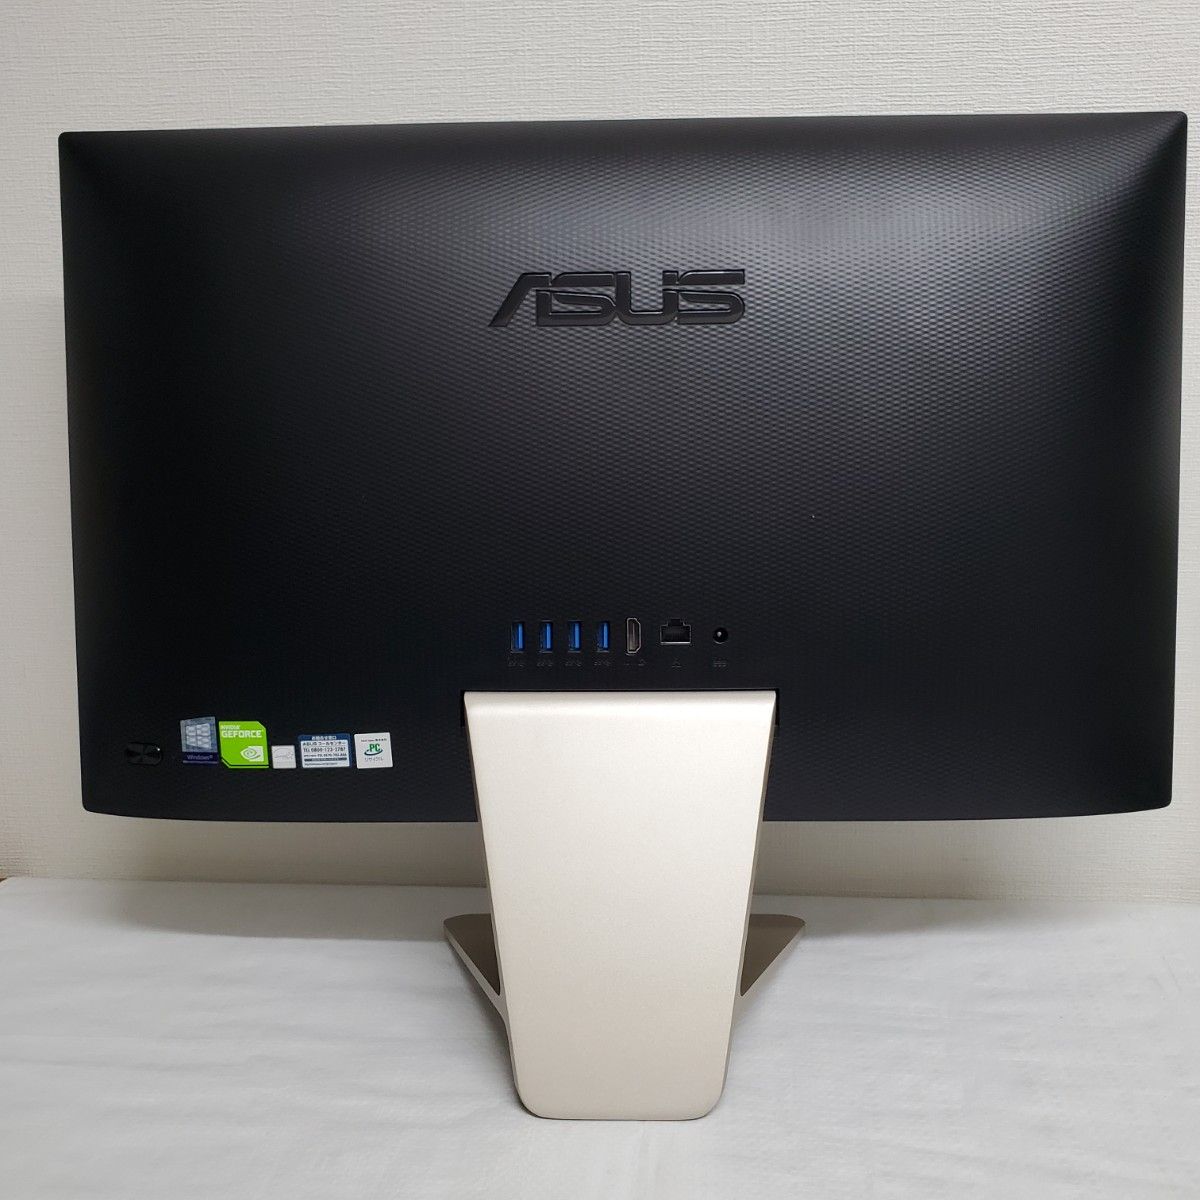 【AIO】ASUS 液晶一体 Win11 Corei5 メモリ8GB/SSD128GB/HDD1TB GeForce MX110